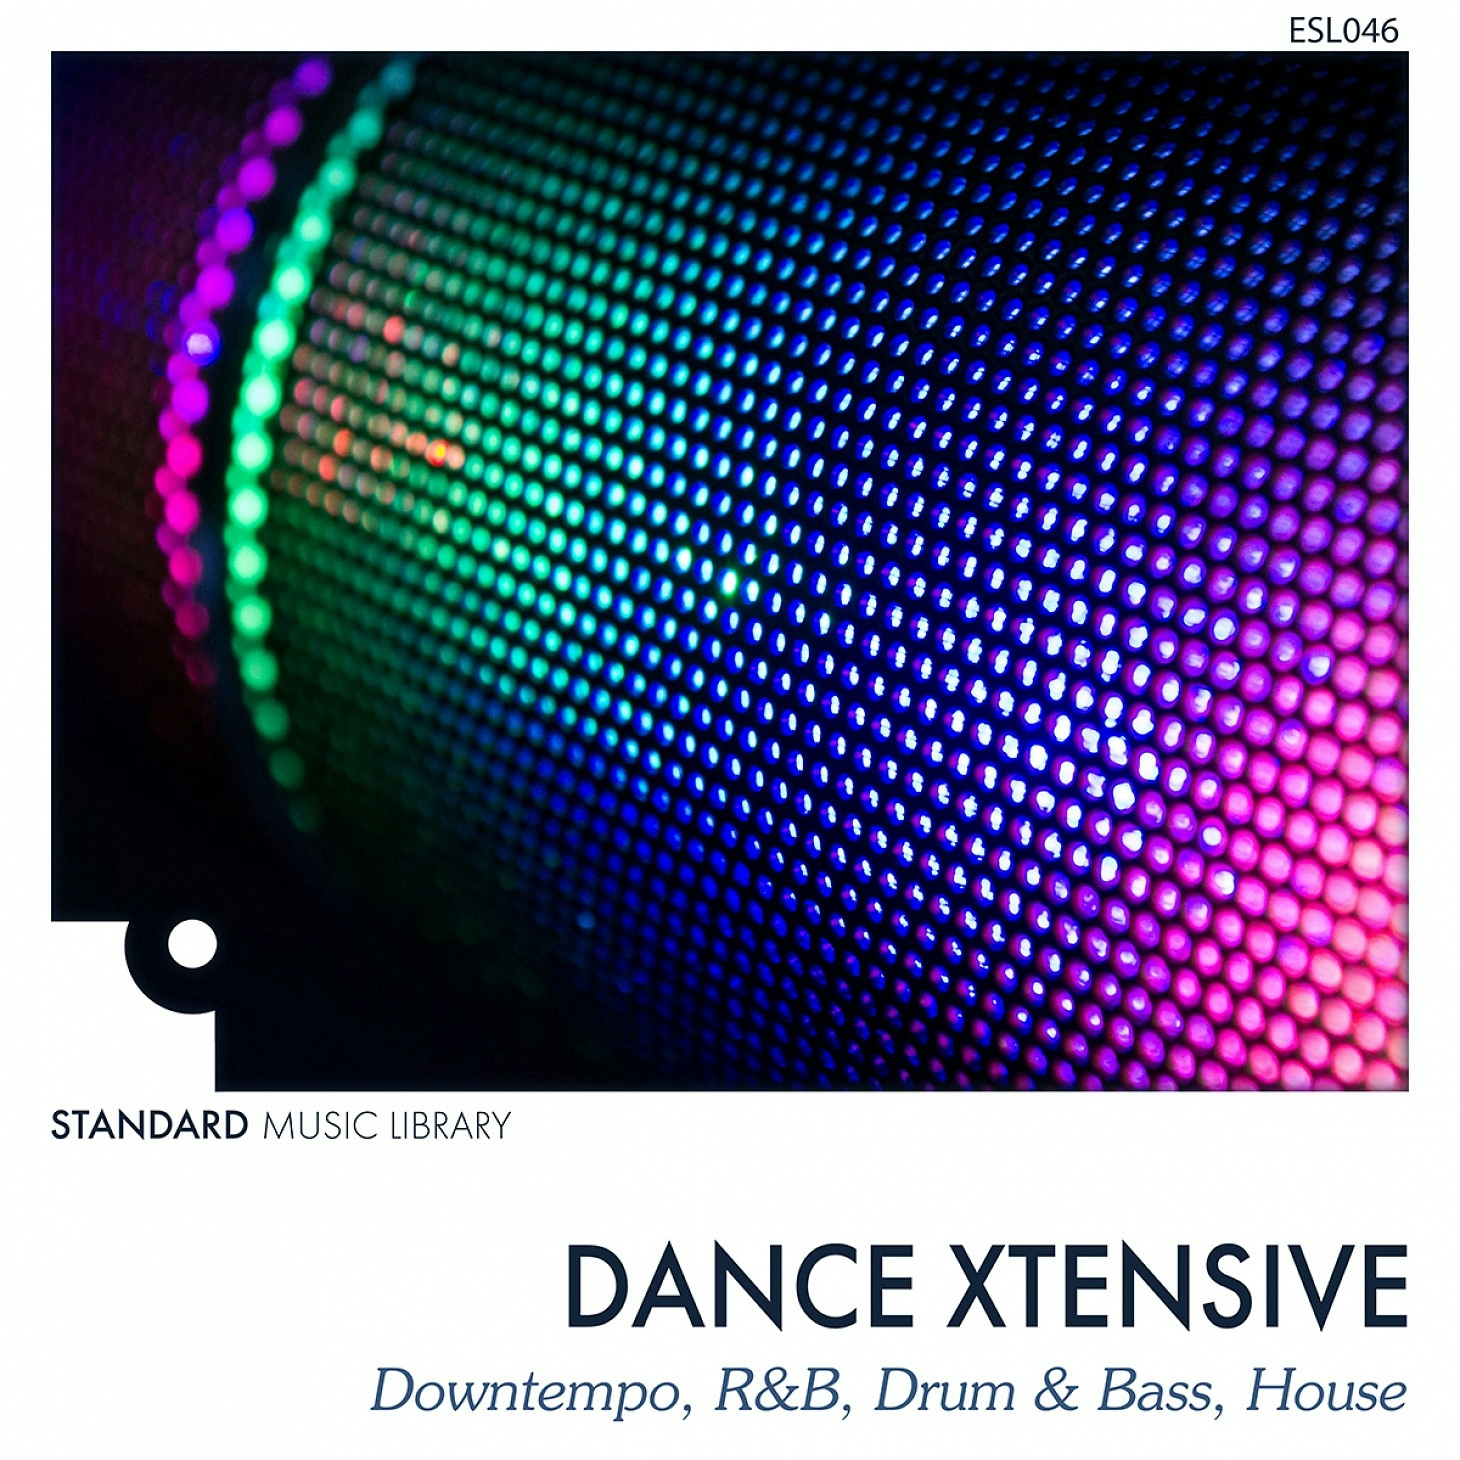 Dance Xtensive